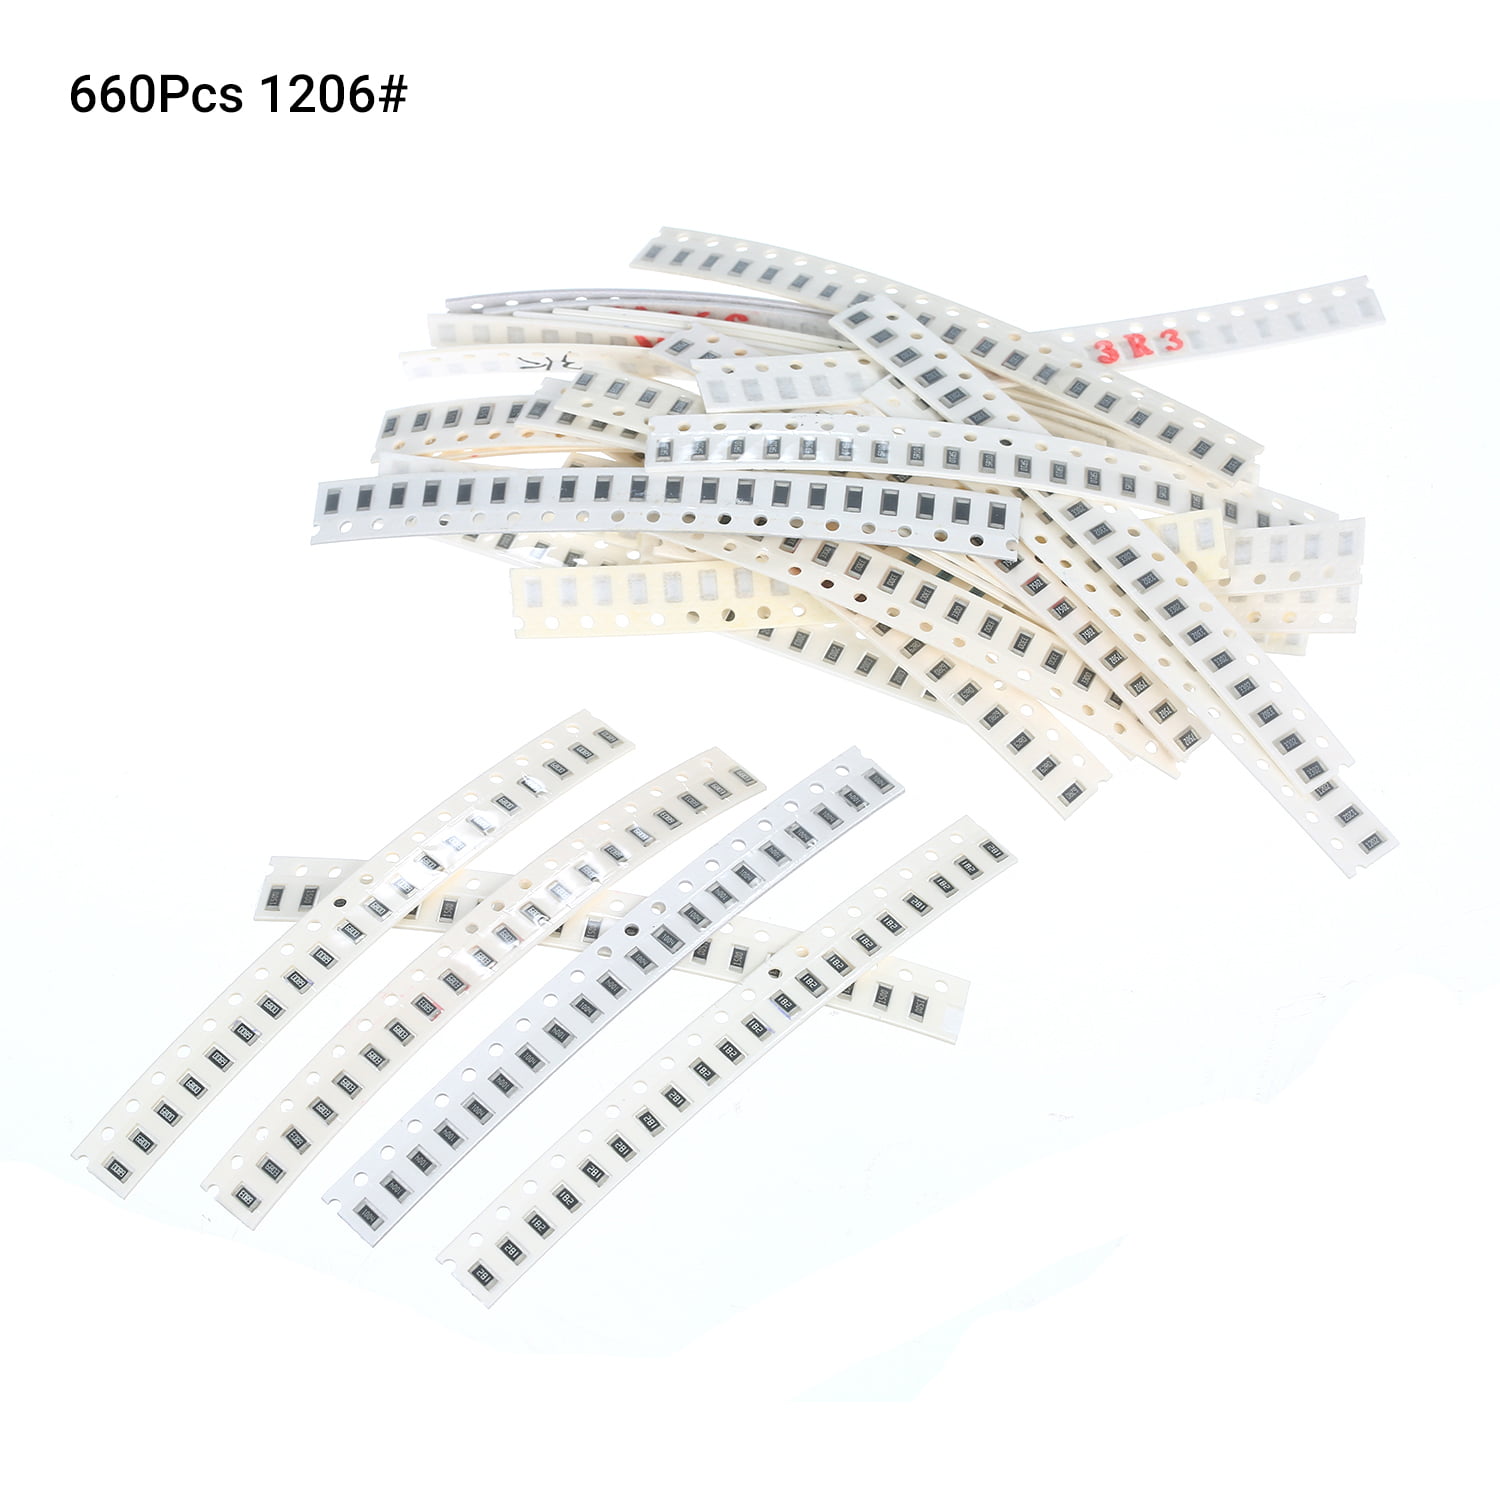 330PCS 2512 SMD Resistor Assorted Kit 1R-1M Ohm 5% 33 Values x 10PCS CA 